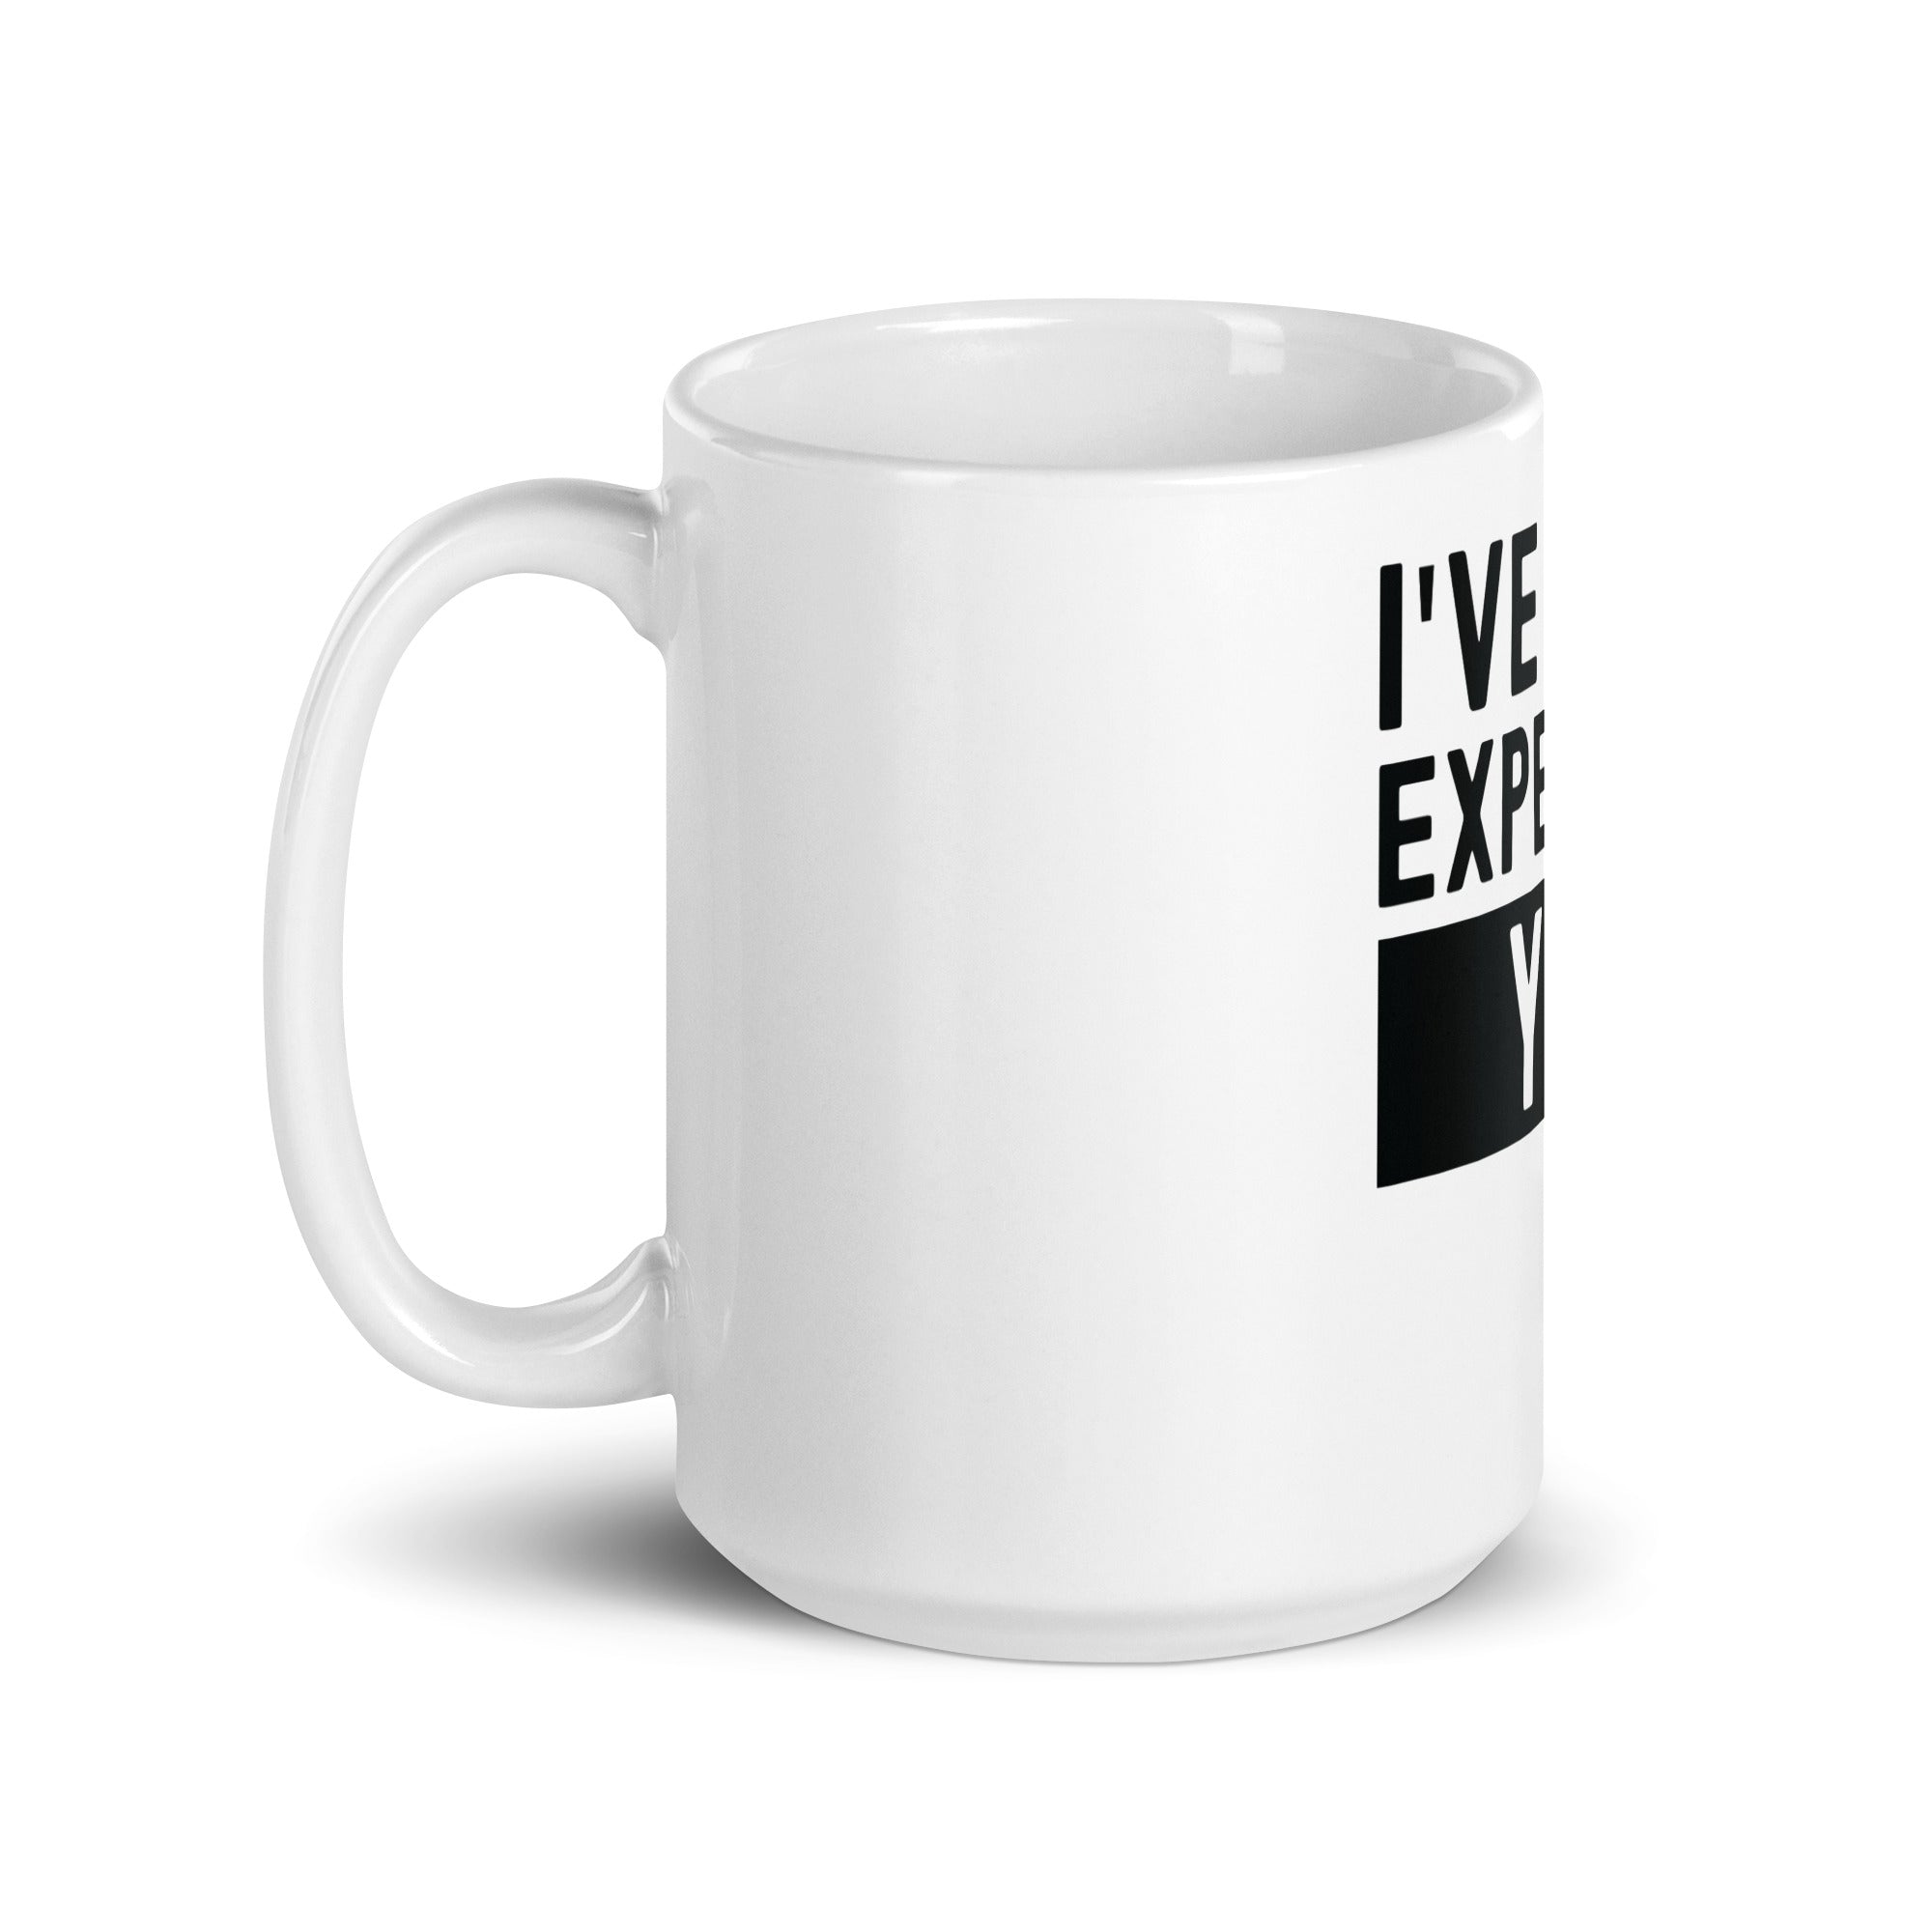 White glossy mug | I've been expecting you